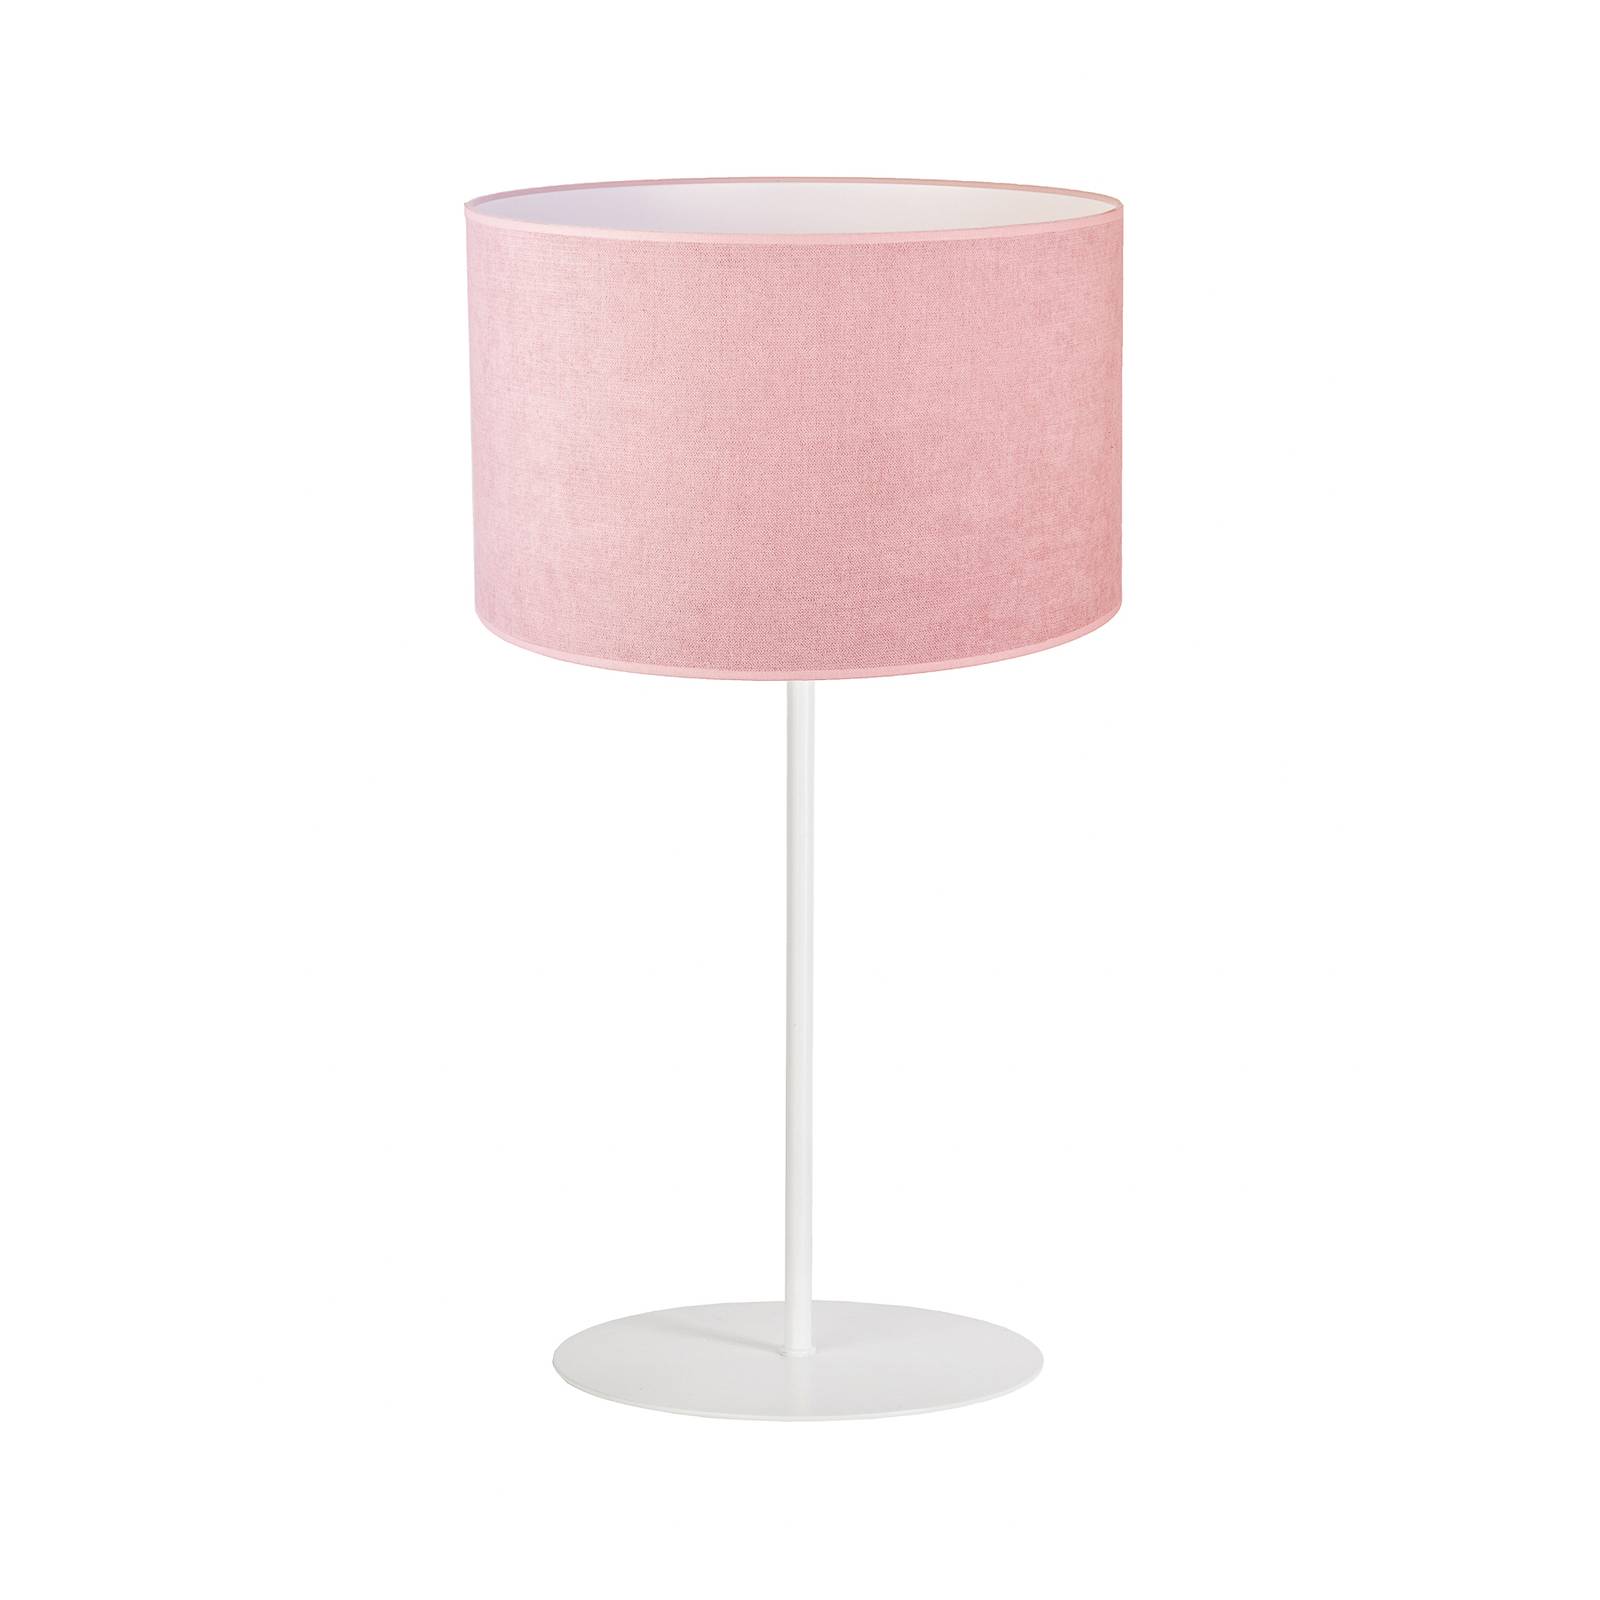 Euluna Tischlampe Pastell Roller Höhe 50cm rosa